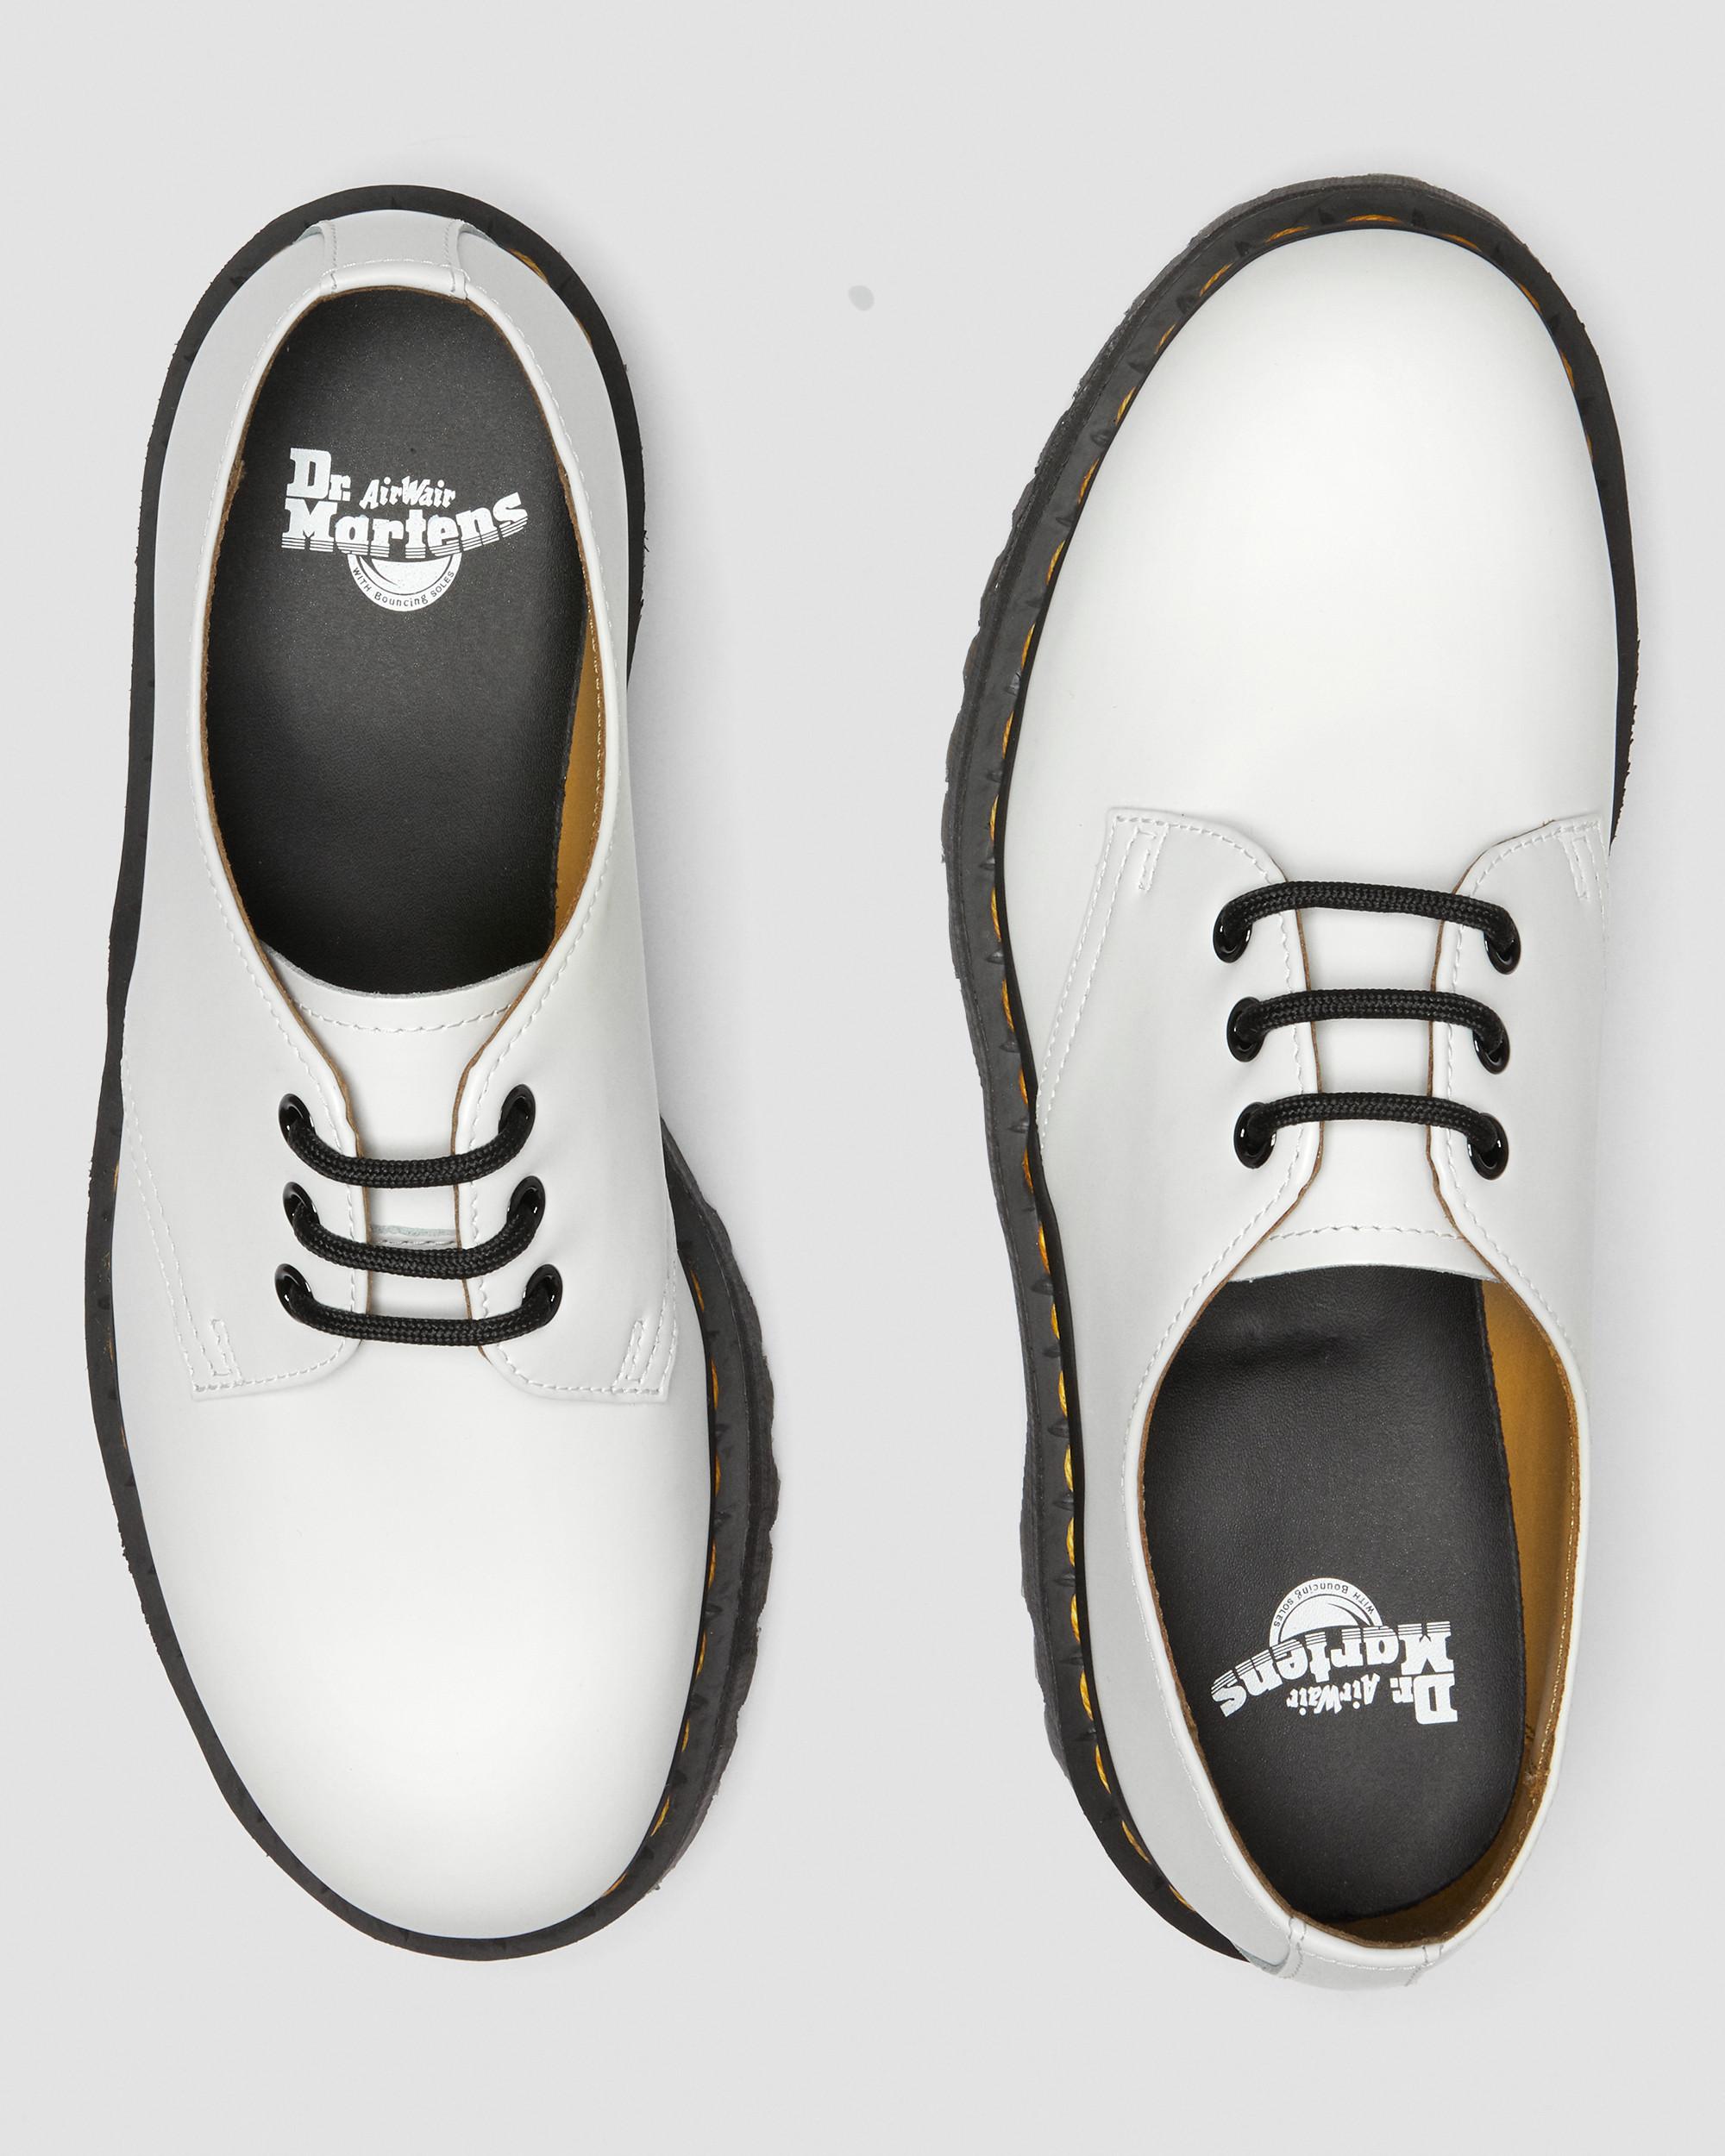 dr martens white shoes